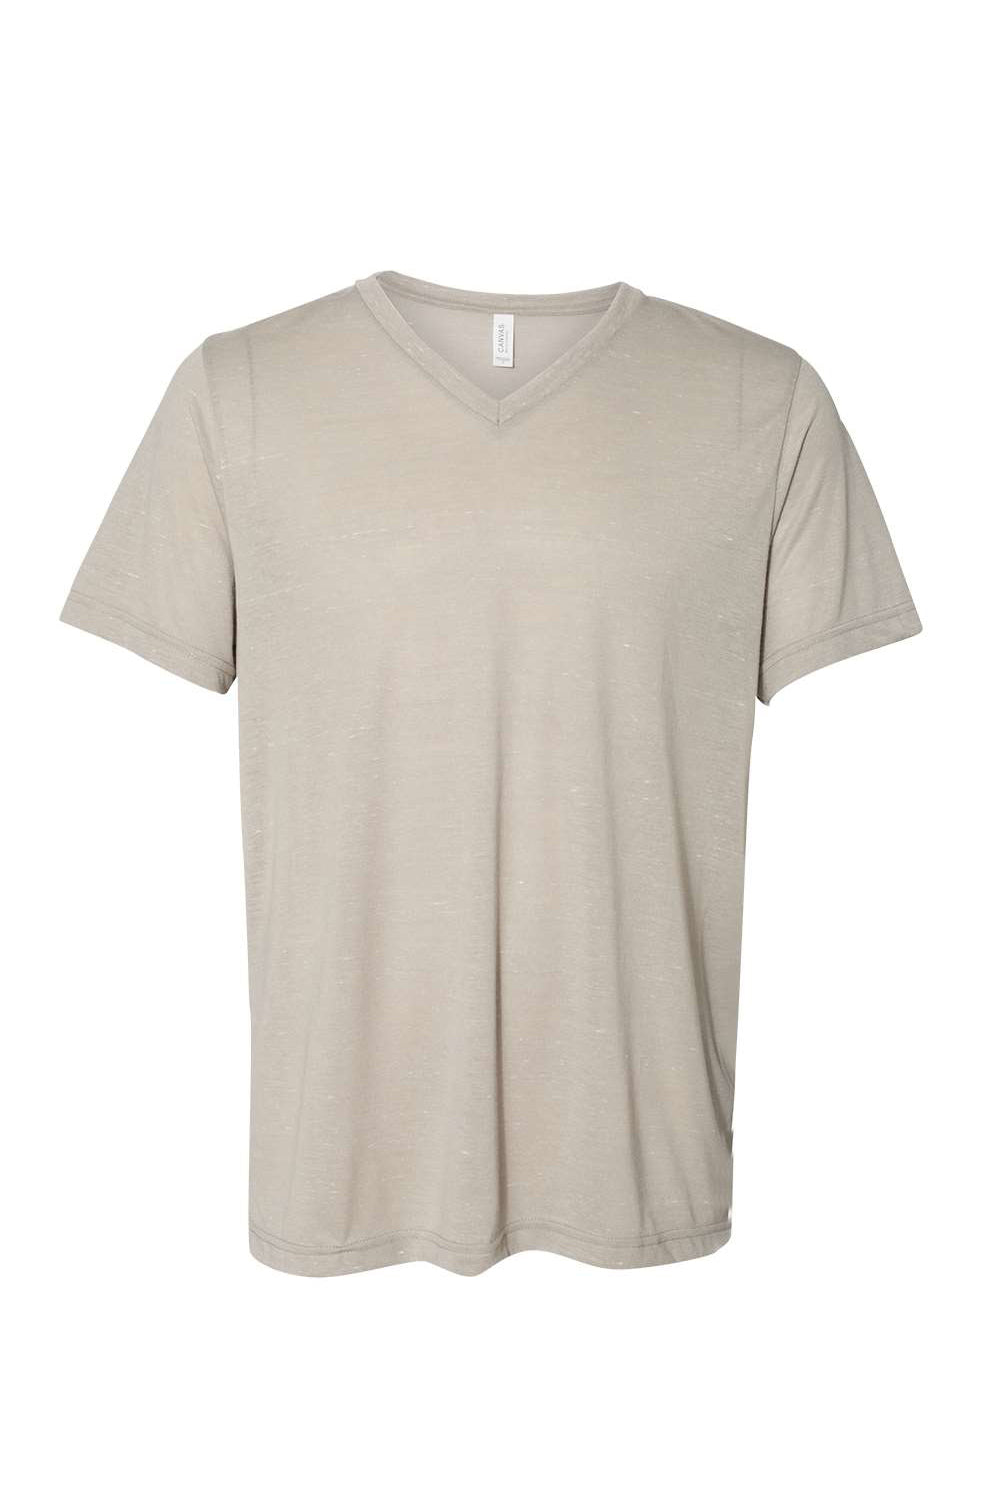 Bella + Canvas BC3005/3005/3655C Mens Jersey Short Sleeve V-Neck T-Shirt Stone Marble Flat Front